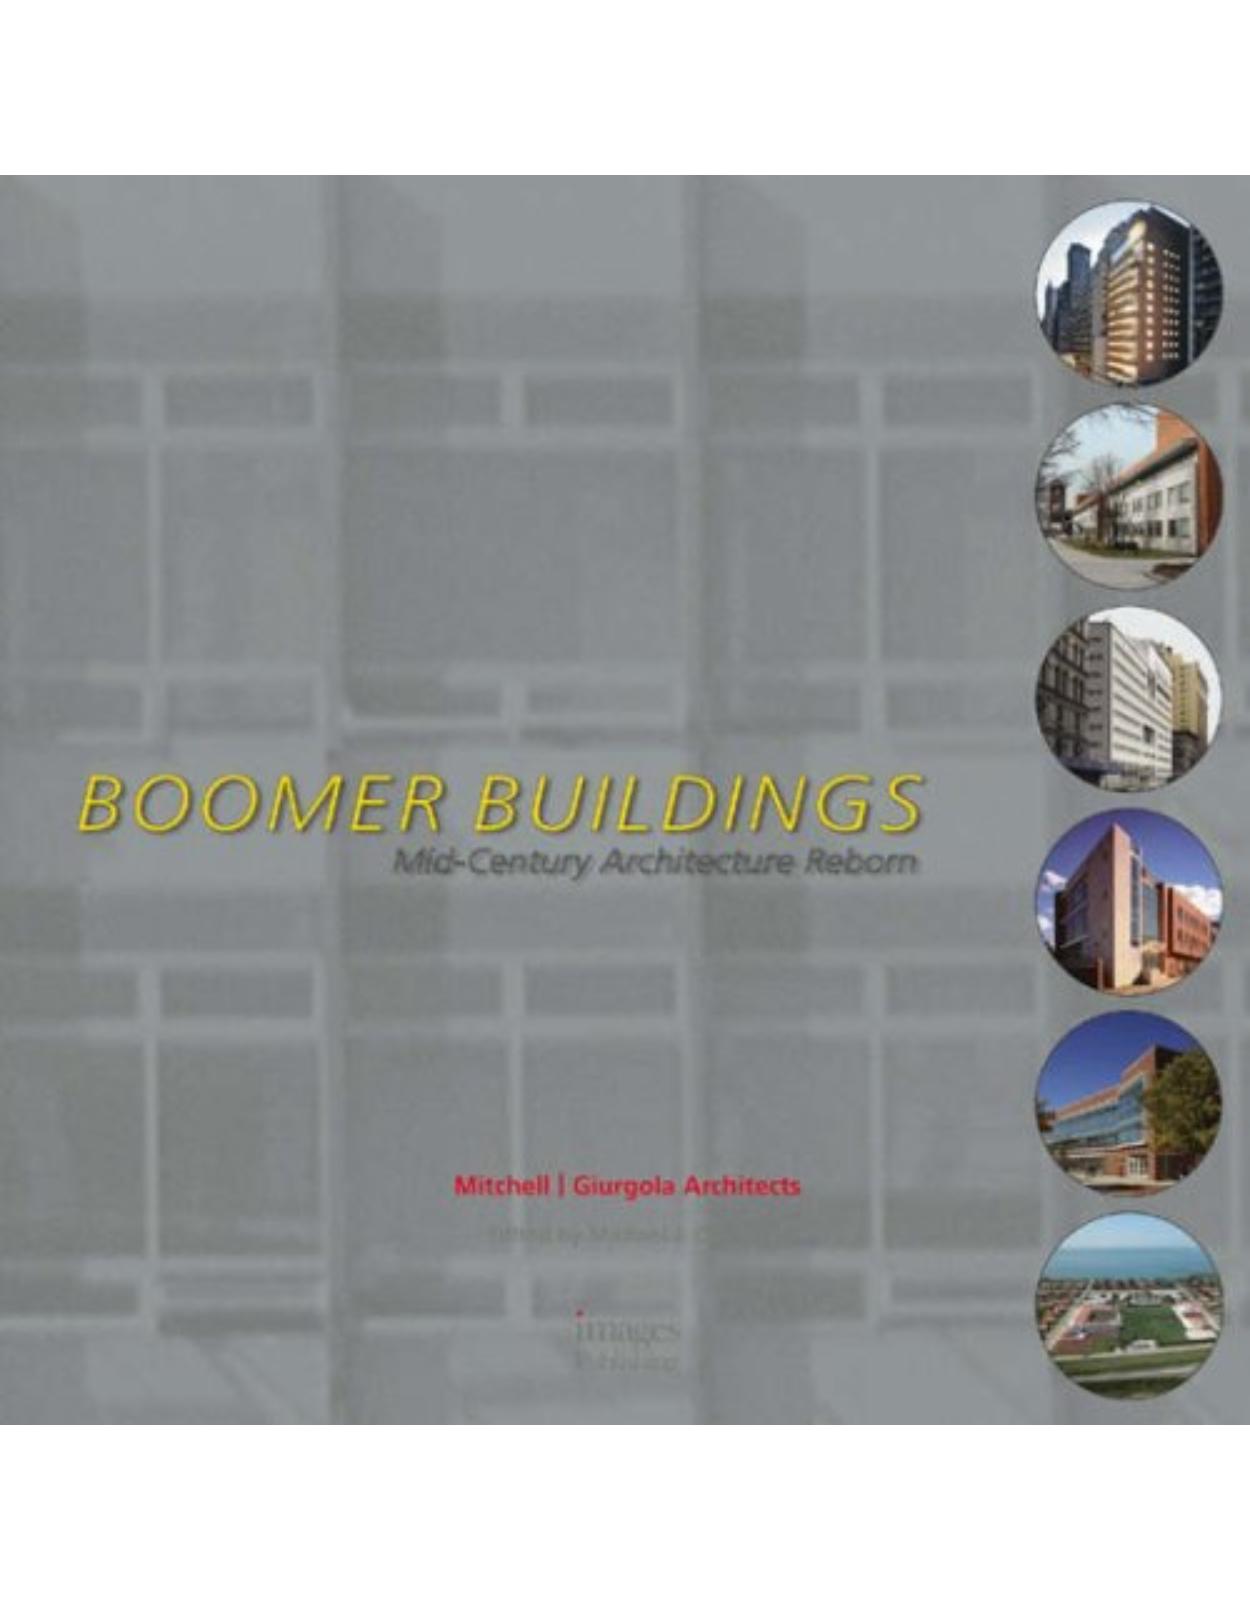 Boomer Buildings: Mid Century Architecture Reborn